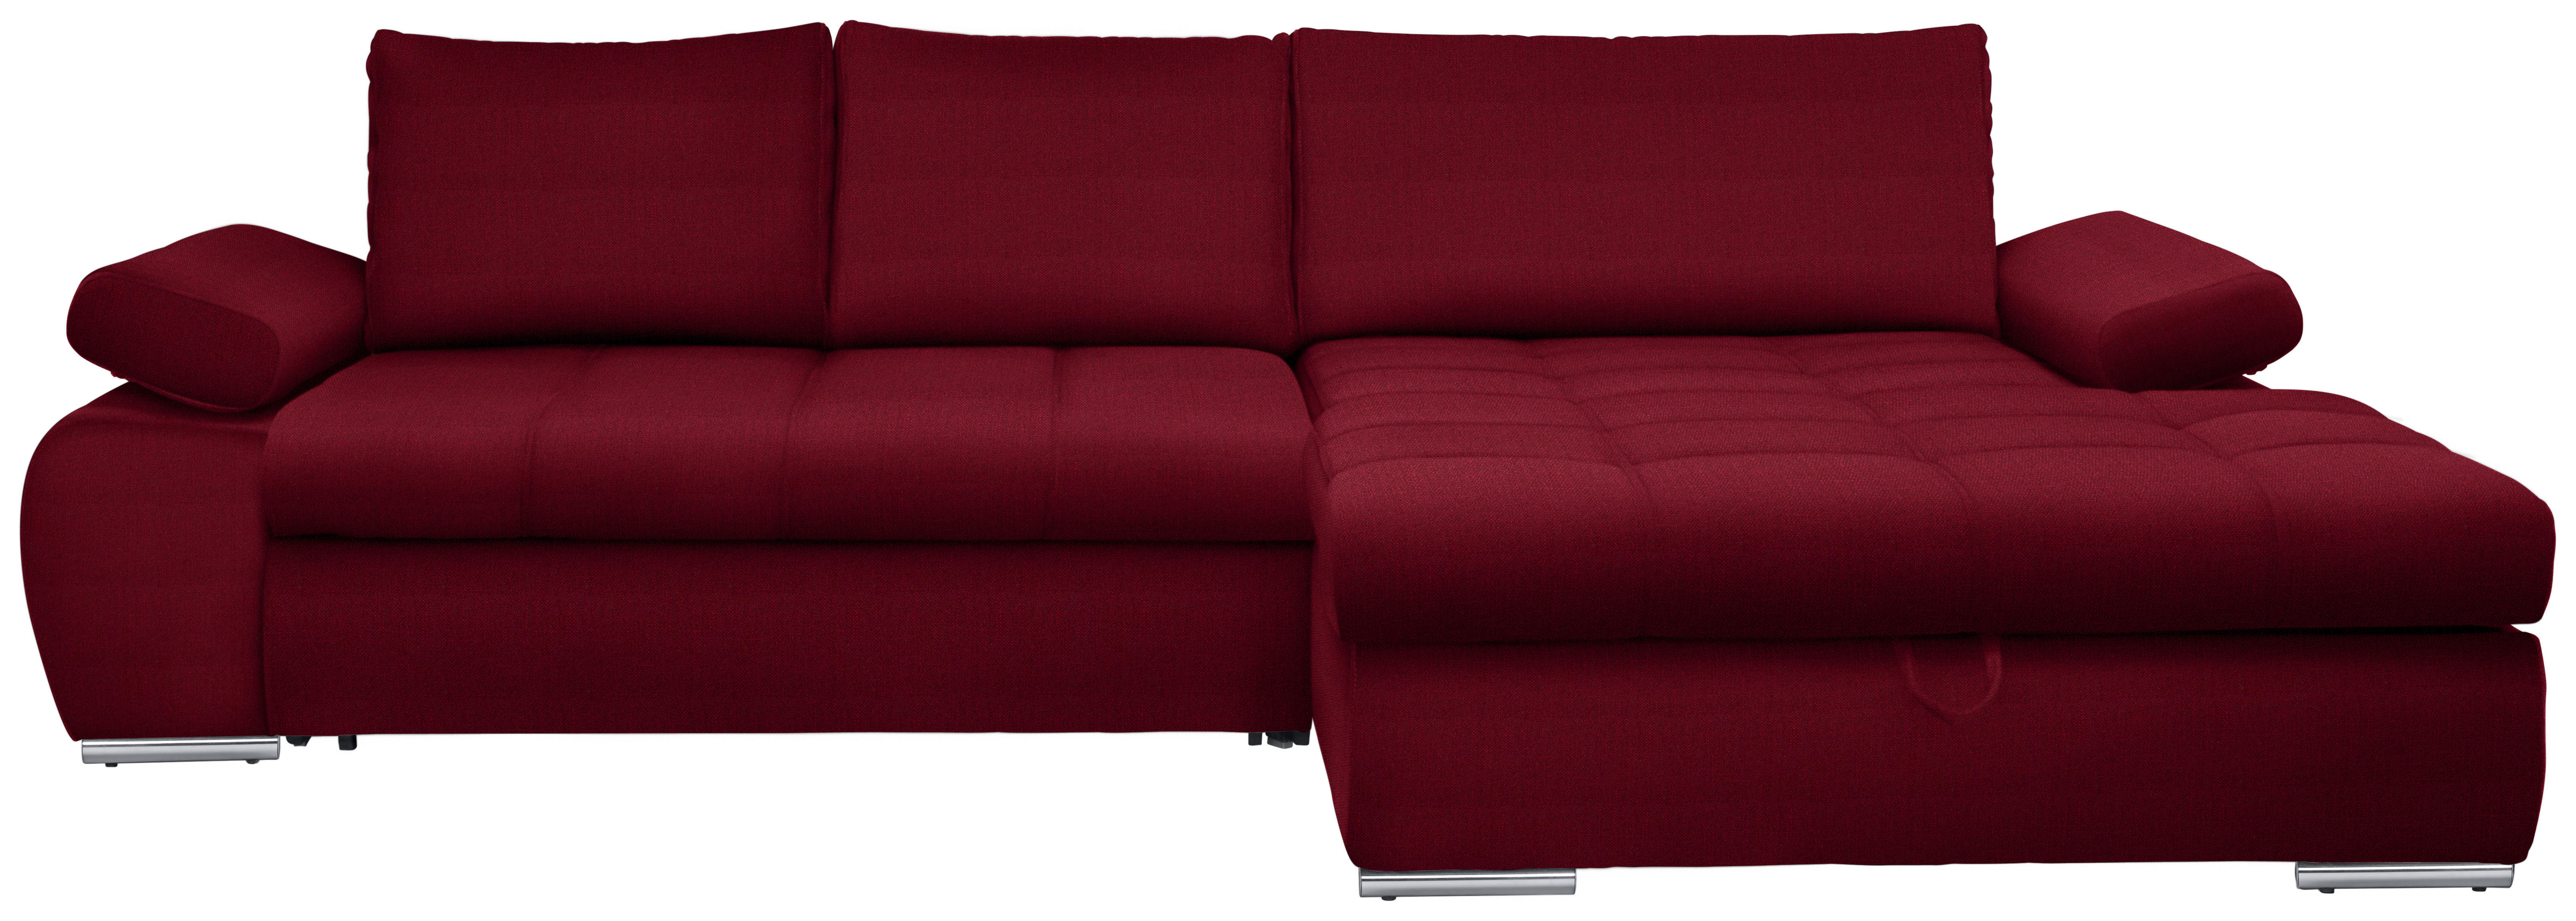 WOHNLANDSCHAFT Rot Flachgewebe  - Chromfarben/Rot, Design, Kunststoff/Textil (294/173cm) - Carryhome